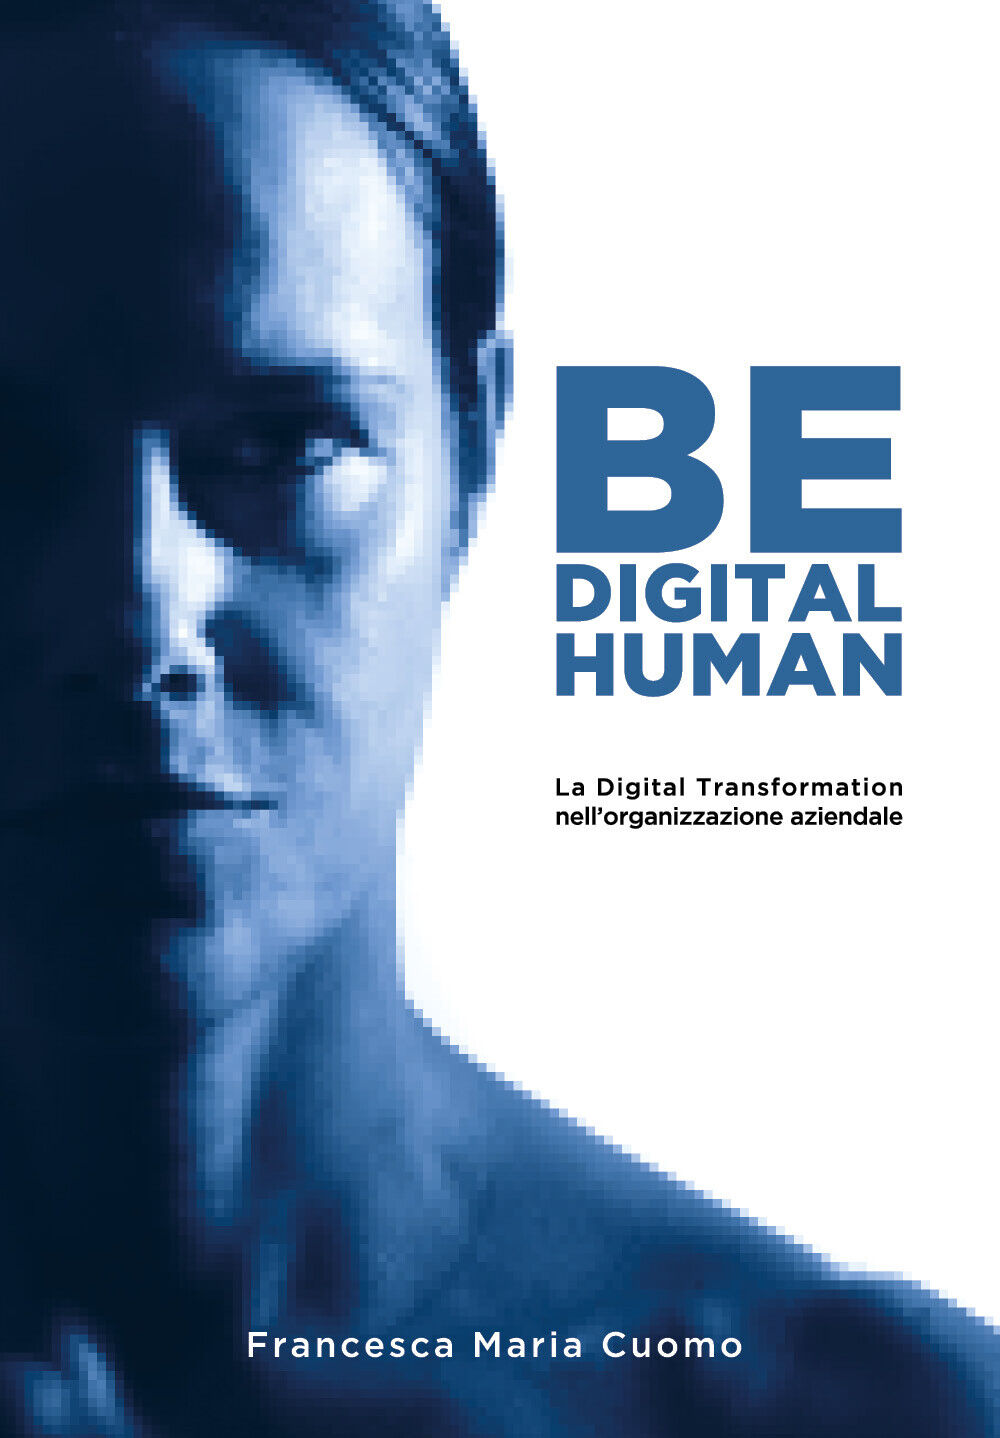 Be digital human di Francesca Maria Cuomo,  2021,  Youcanprint